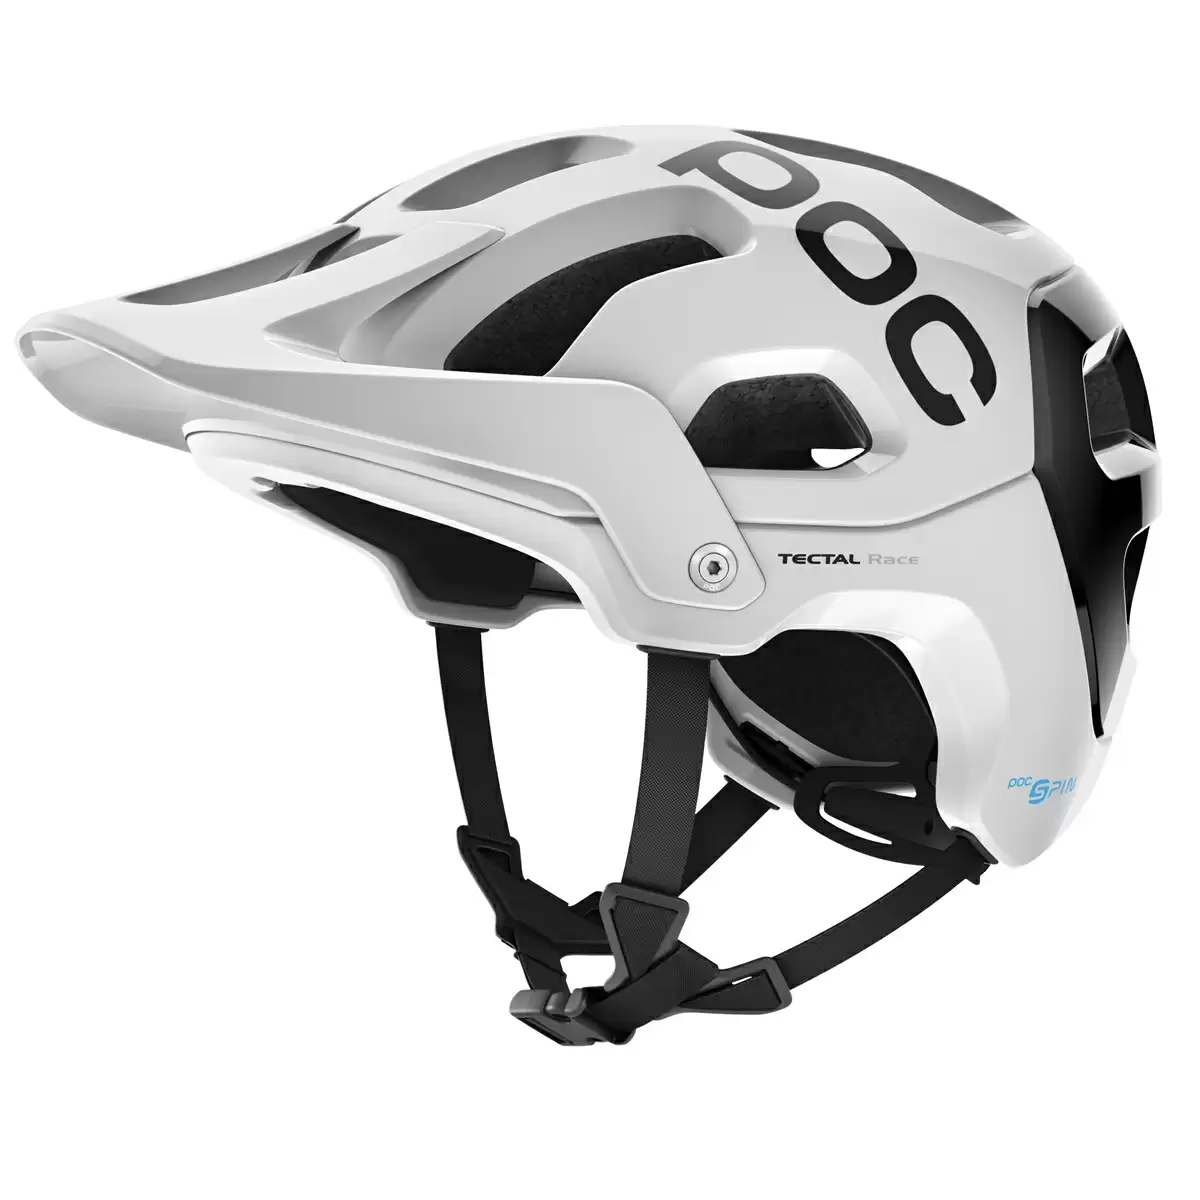 Enduro helmet Tectal Race Spin white size XS-S (51-54cm) - image